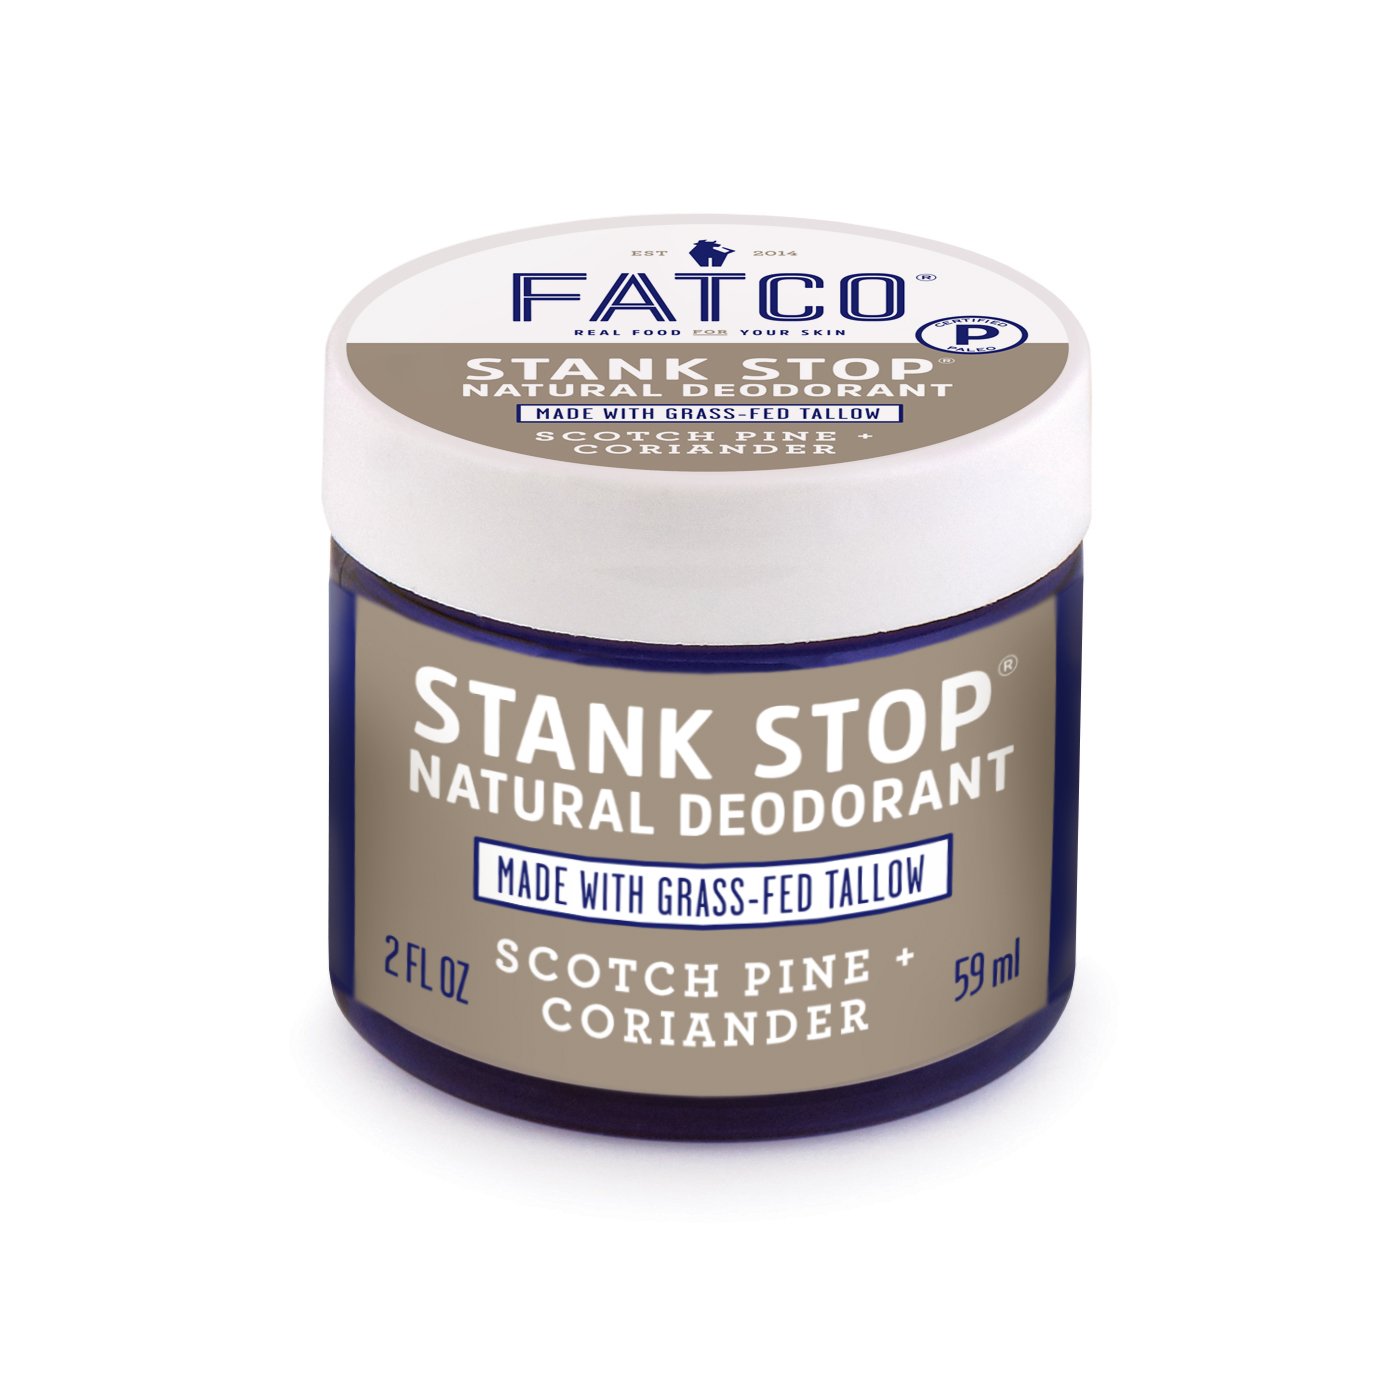 Stank Stop Cream Deodorant, Scotch Pine + Coriander, 2oz